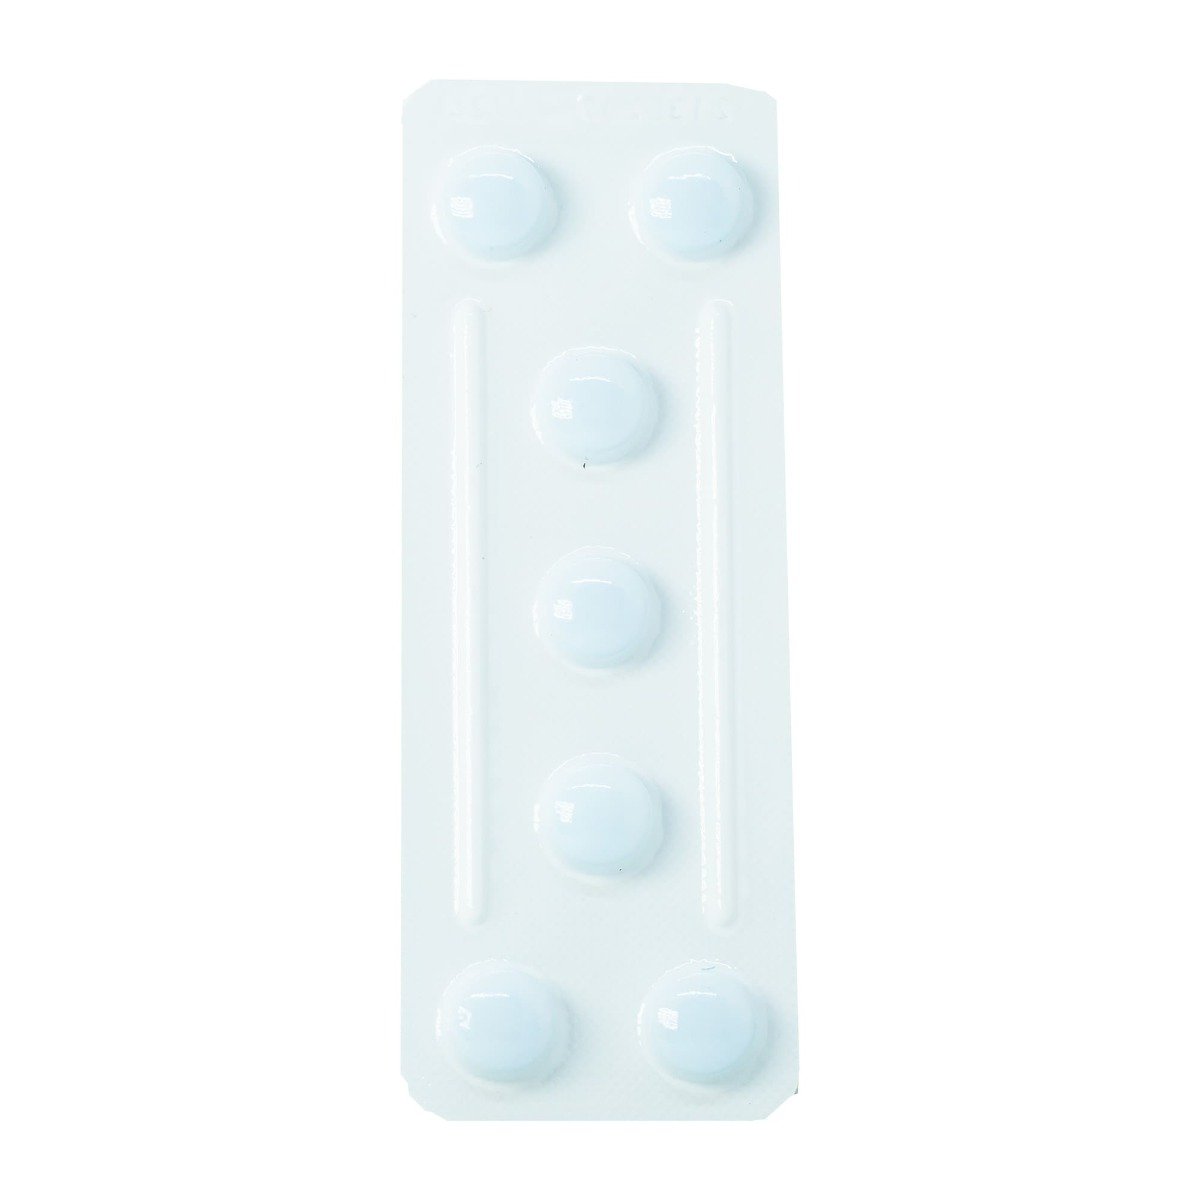 Atoreza 10 mg-20 mg - 21 Tablets - Bloom Pharmacy